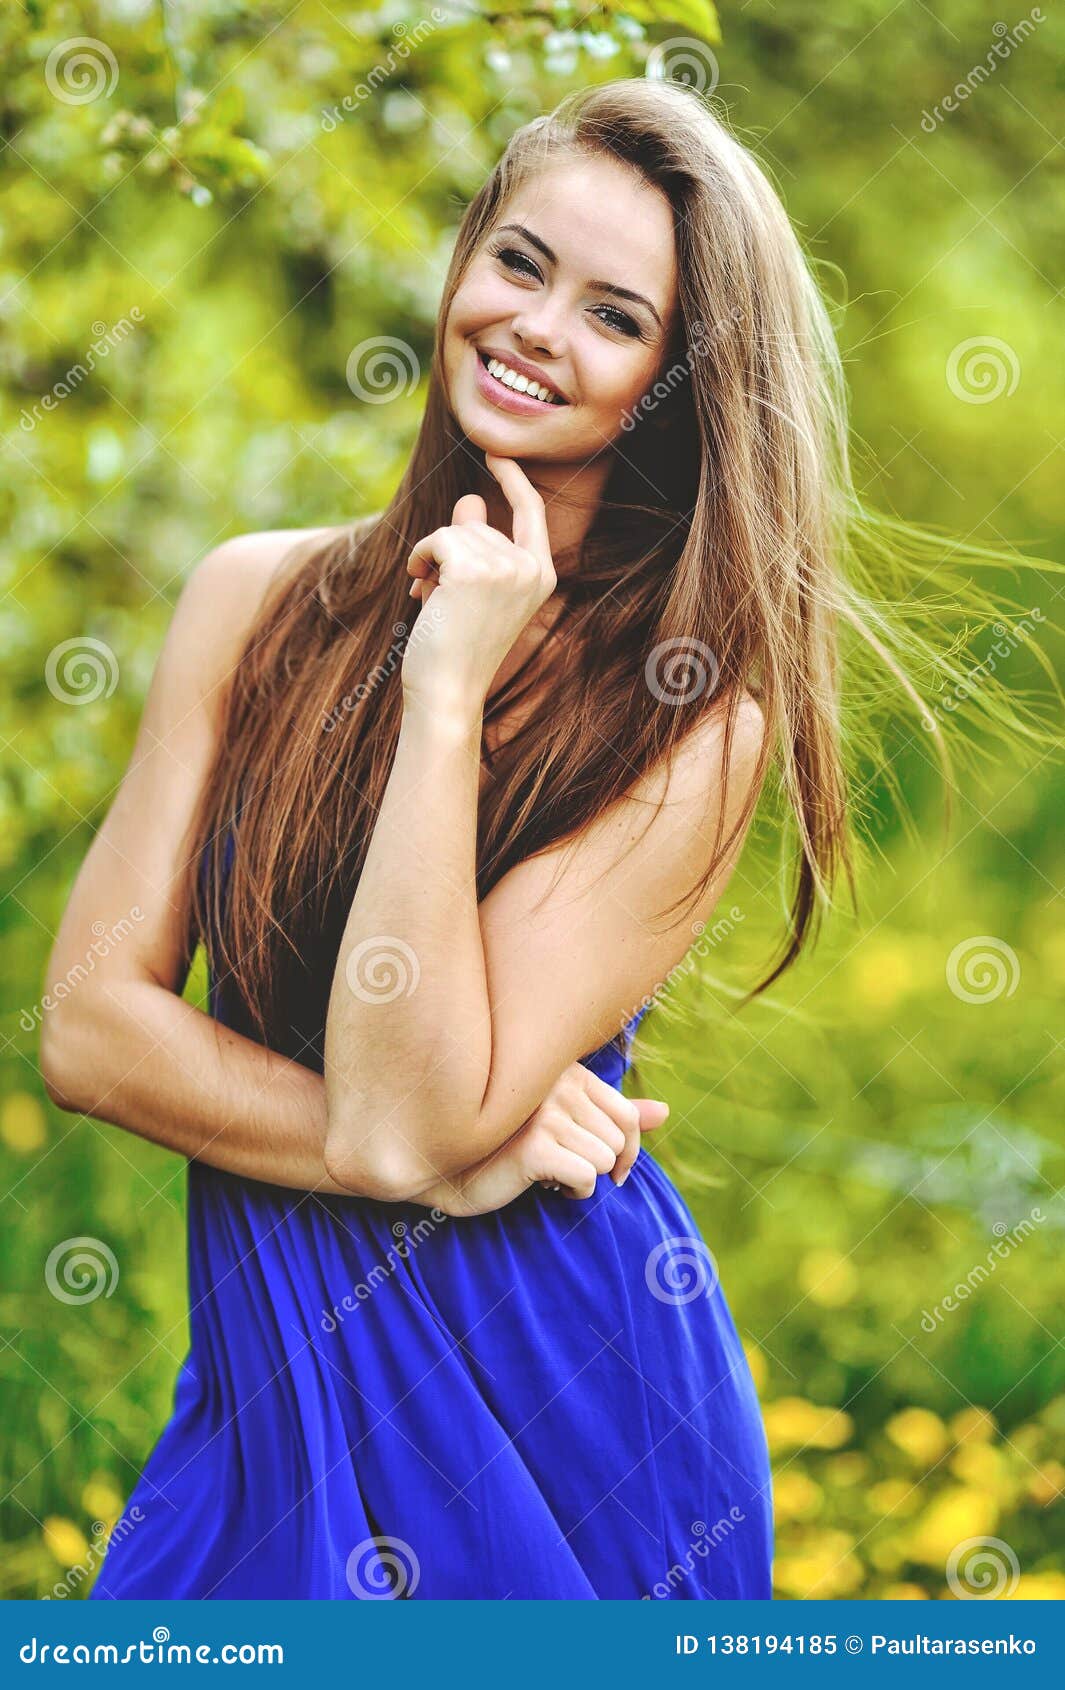 Beautiful Smiling Girl in Blure Dress Stock Image - Image of hair ...